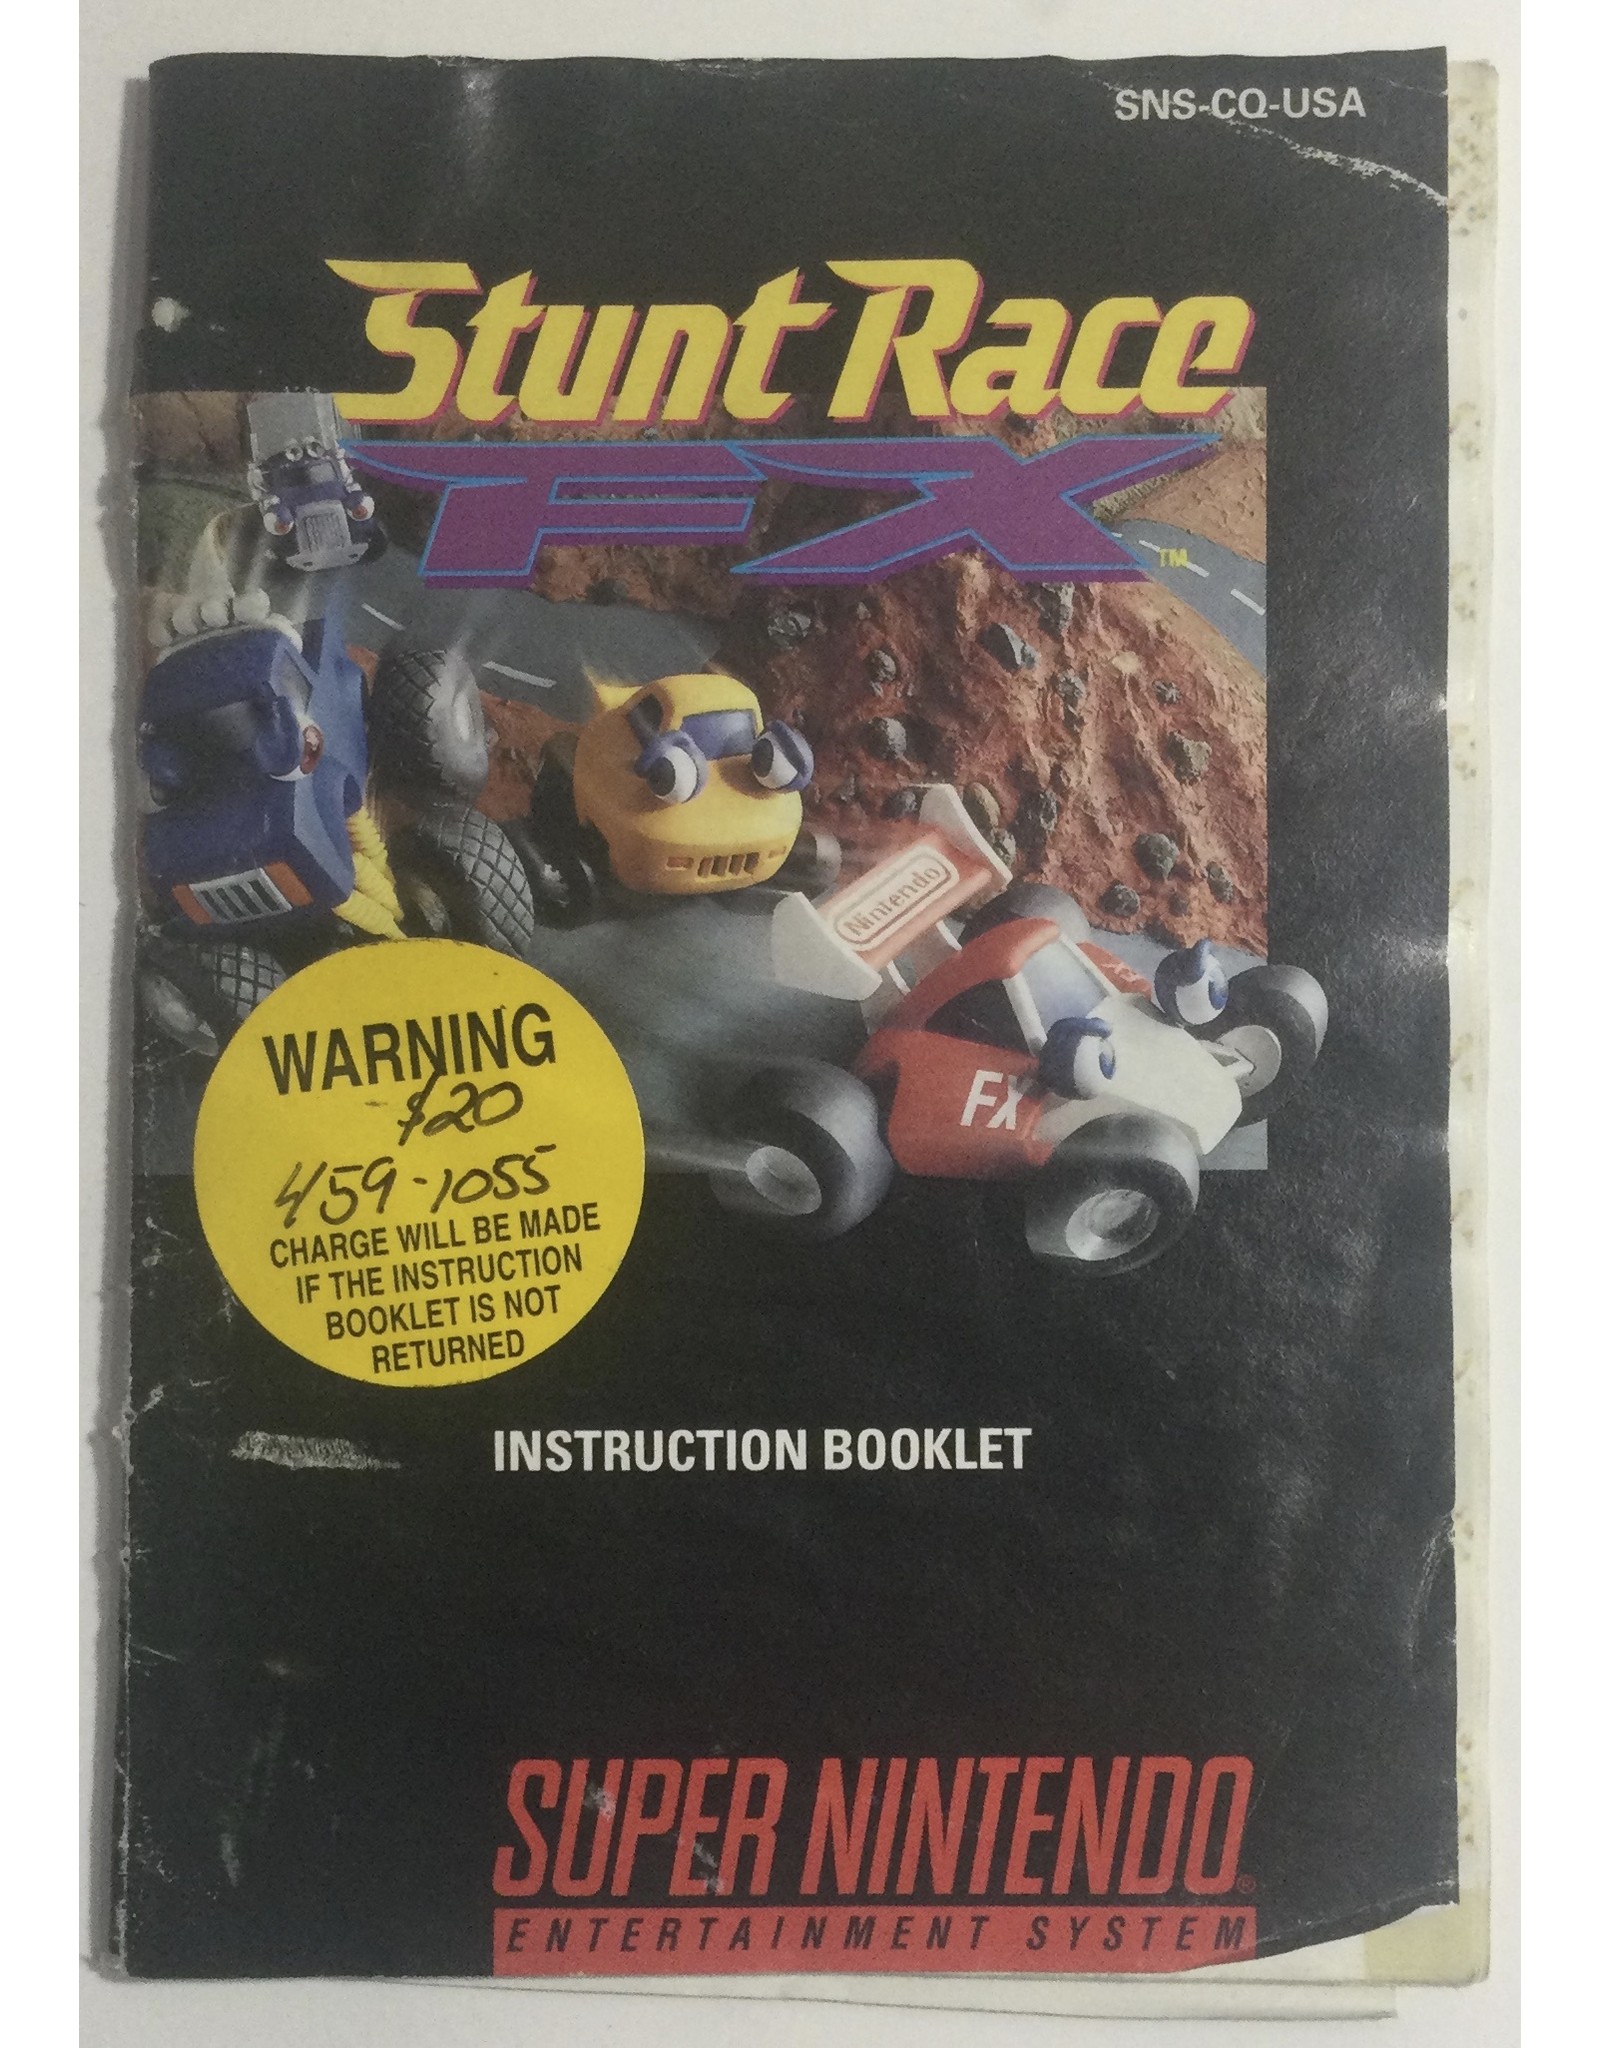 SUPER FX Stunt Race FX for Super Nintendo Entertainment System (SNES) - CIB